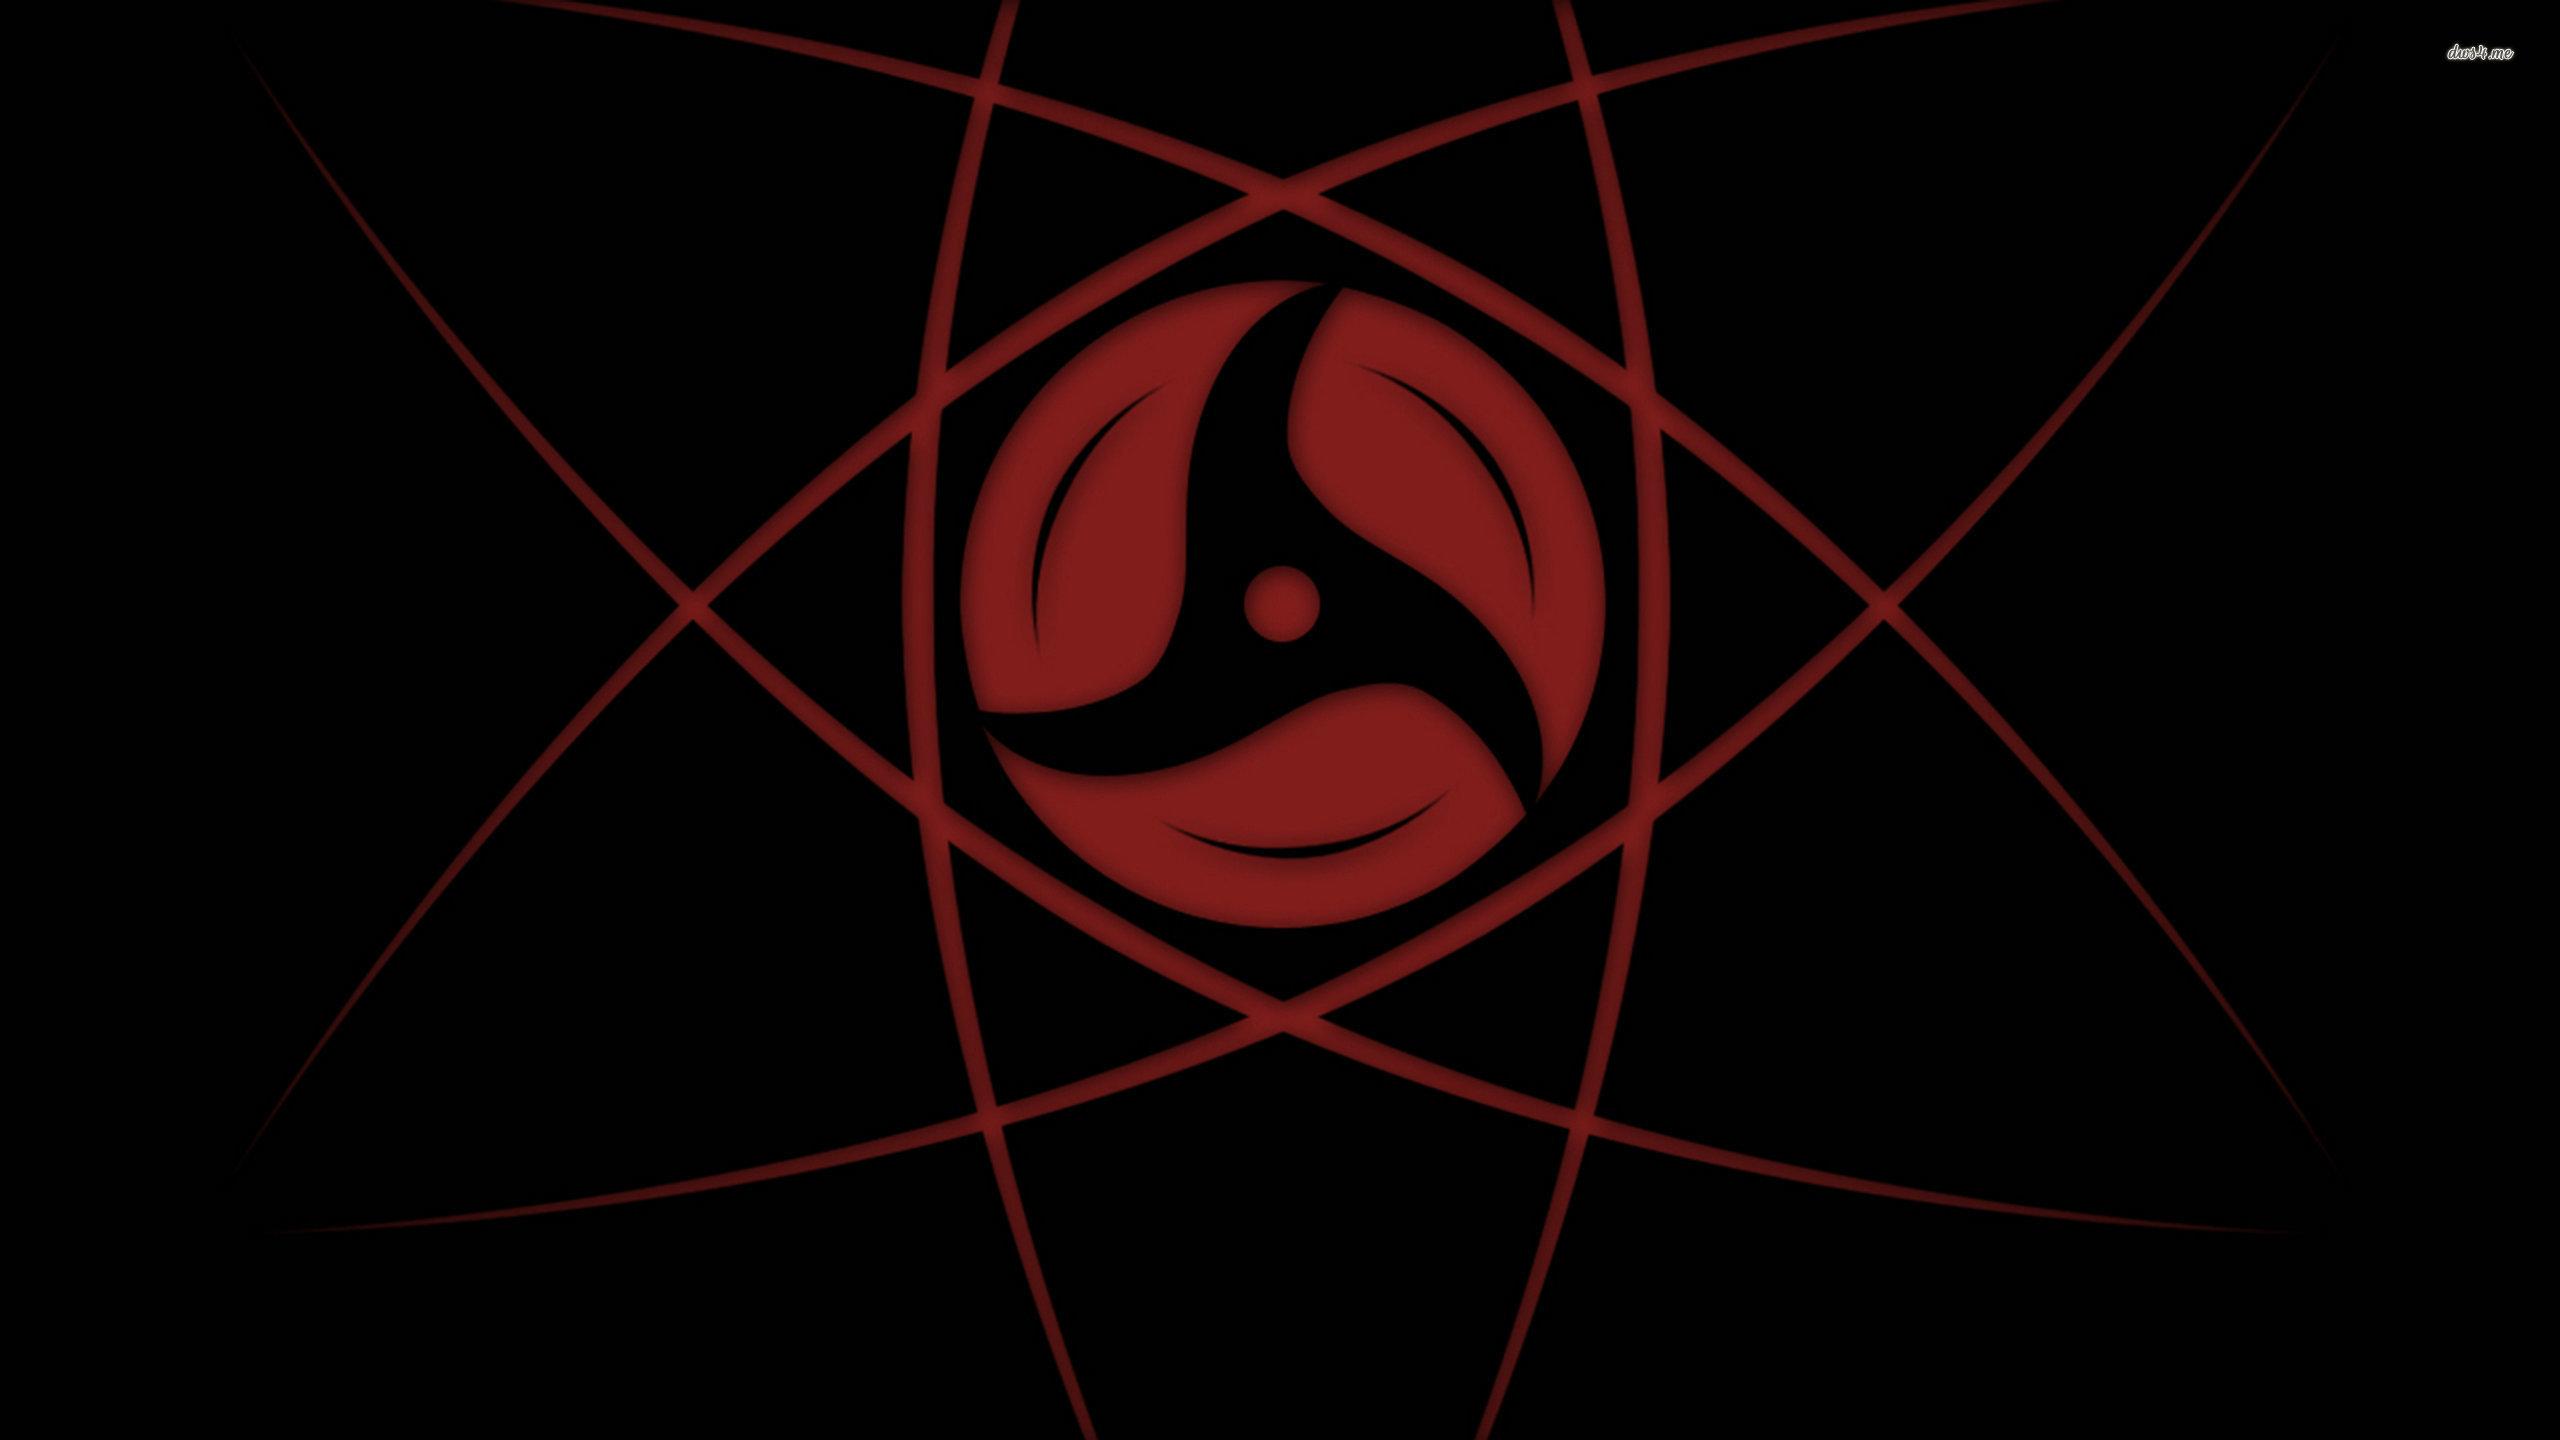 Naruto red logo wallpapers